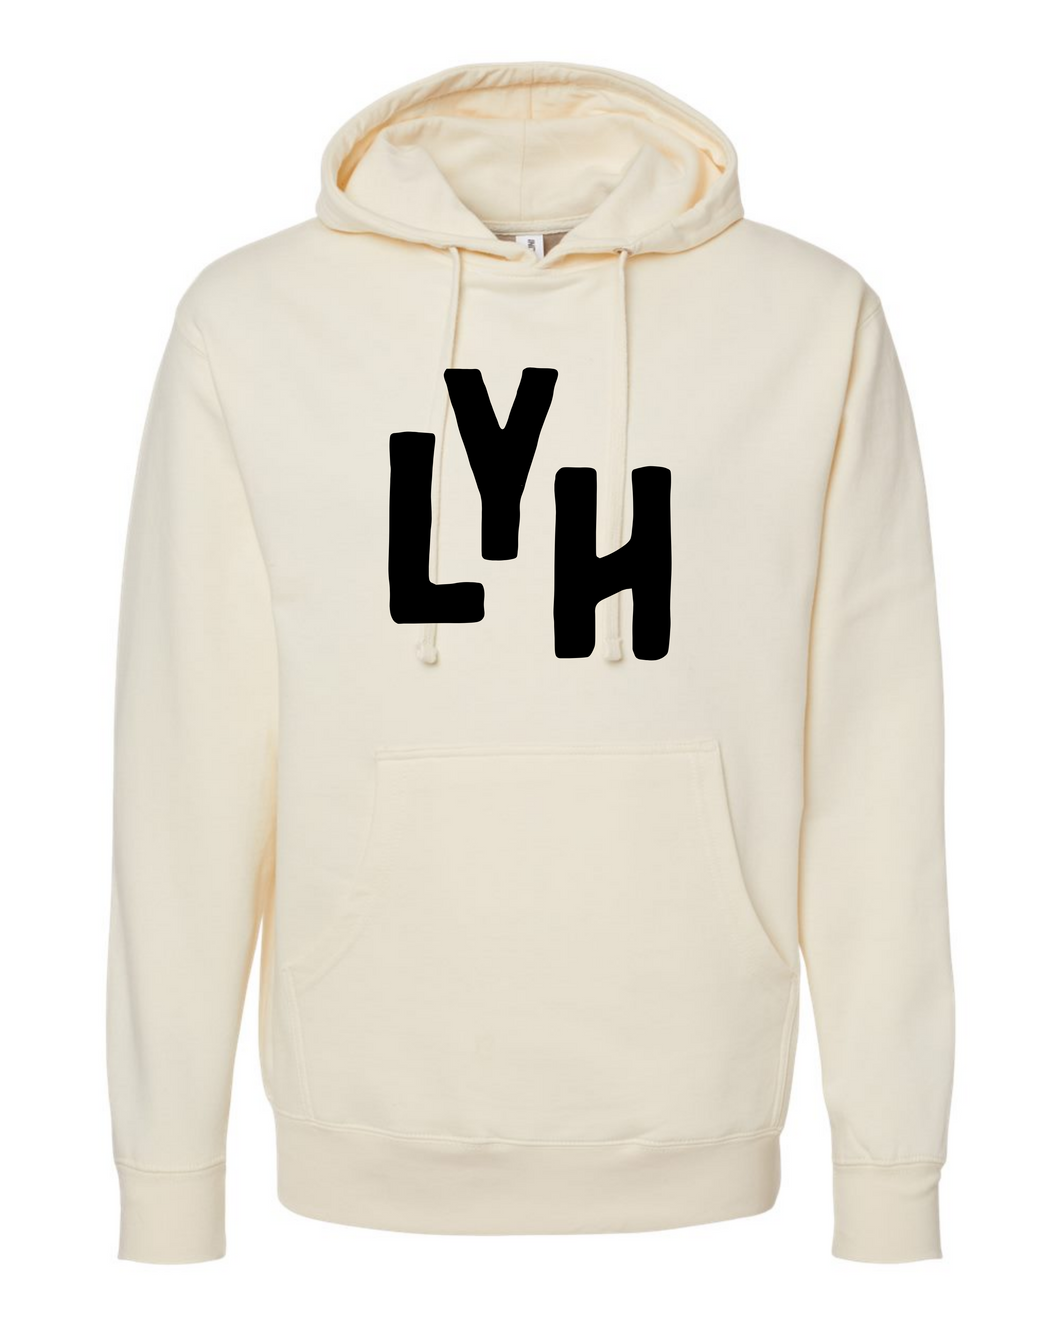 LYH - Sweatshirt